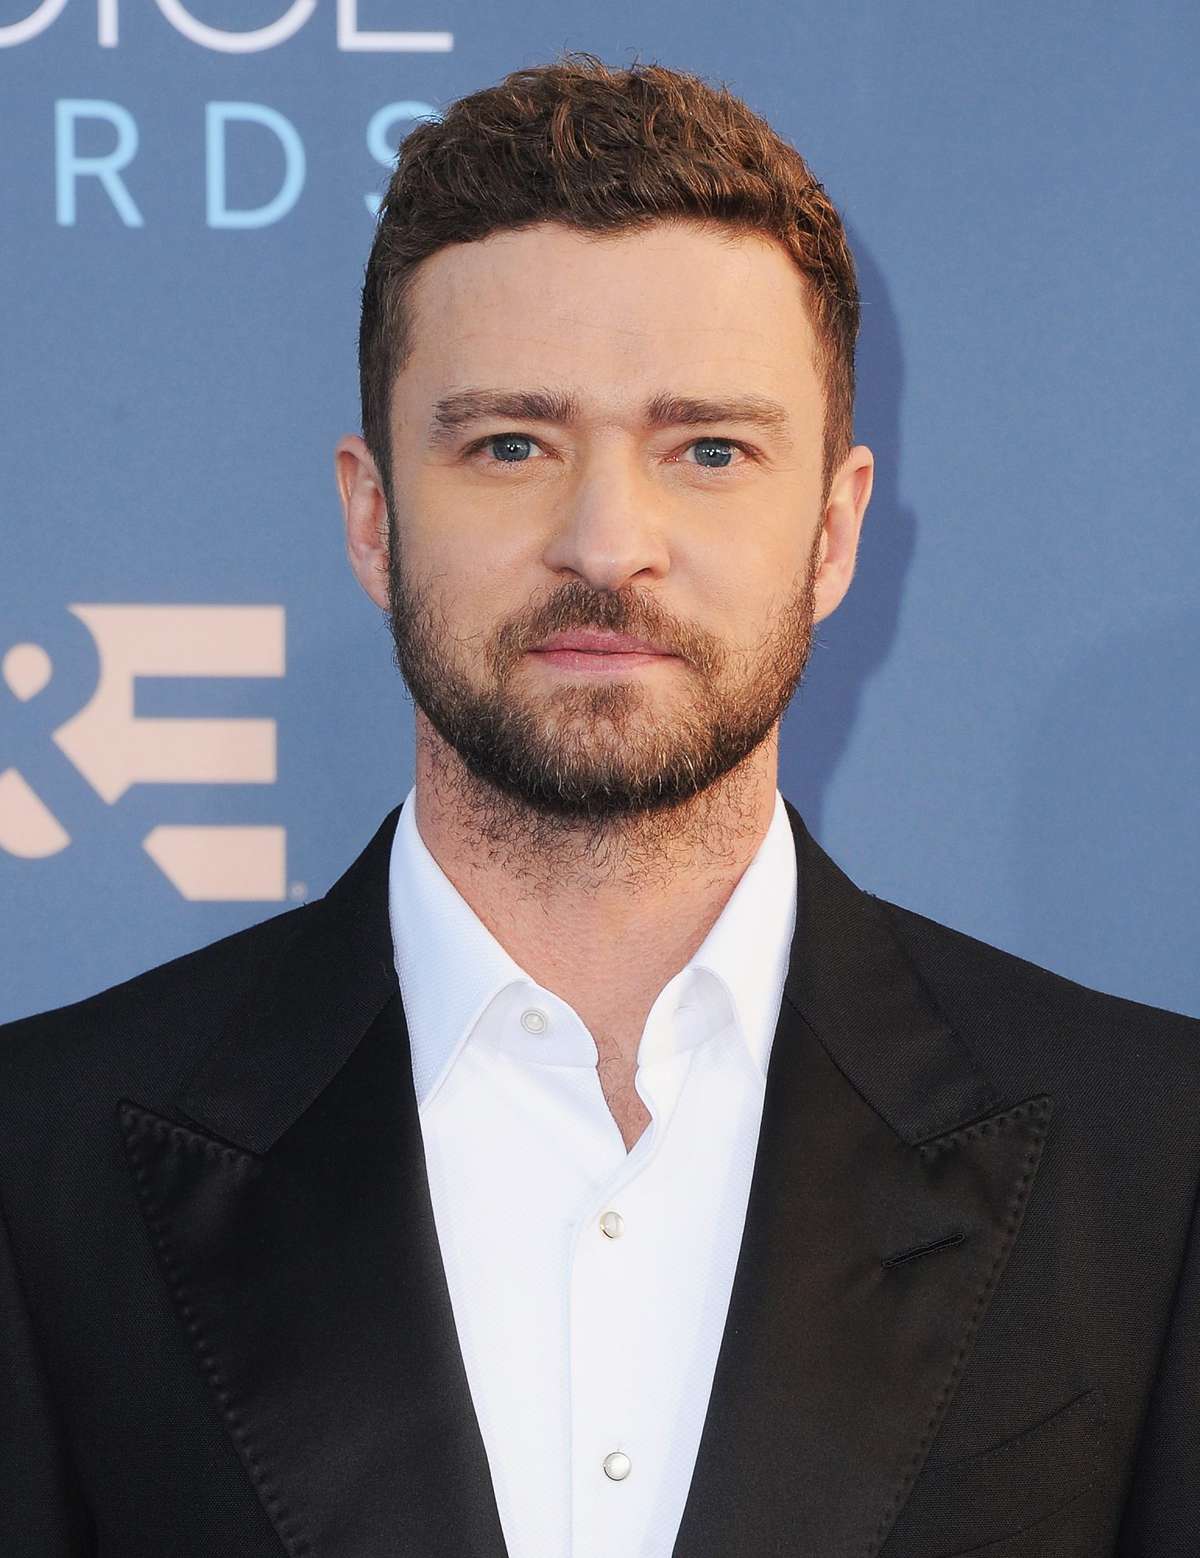 Justin Timberlake - December 11, 2016 - LEAD